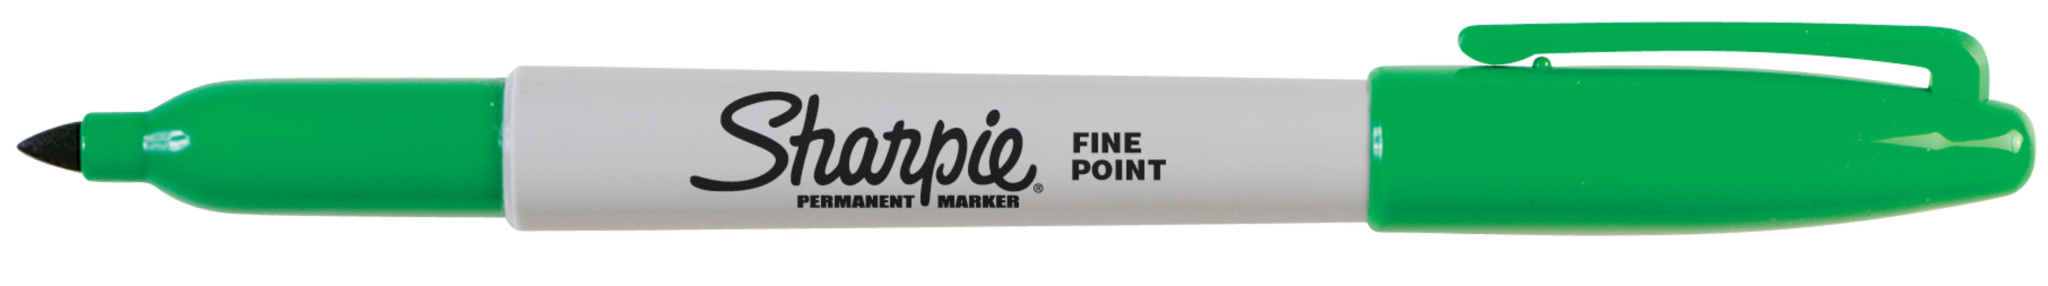 Sharpie Permanent Marker Fine - RISD Store